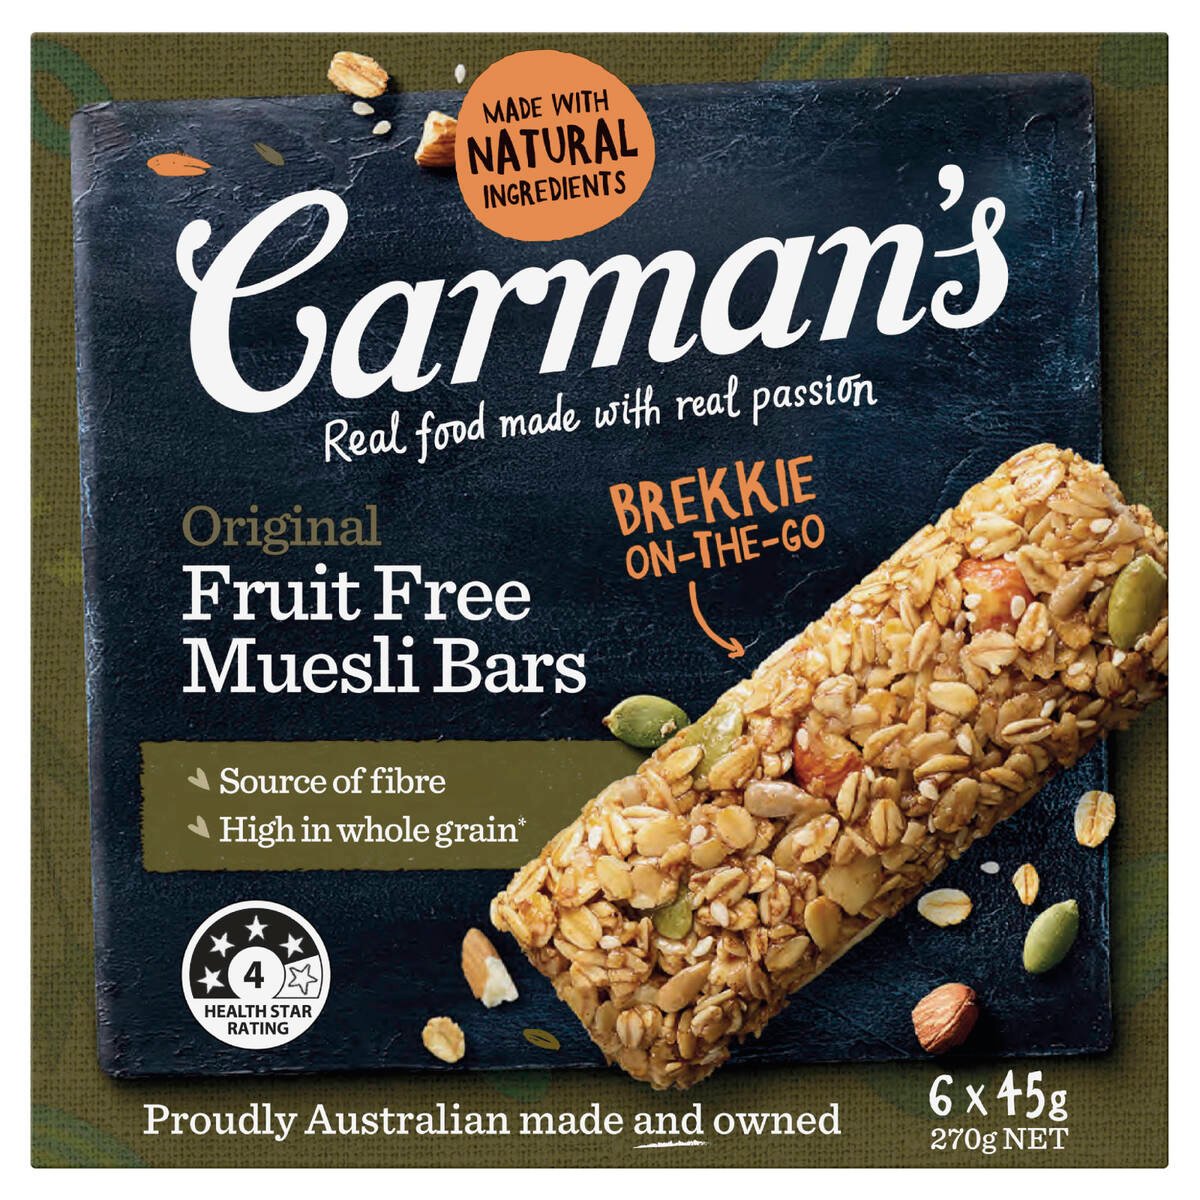 Carman's Original Fruit Free Muesli Bar 6 x 45 g